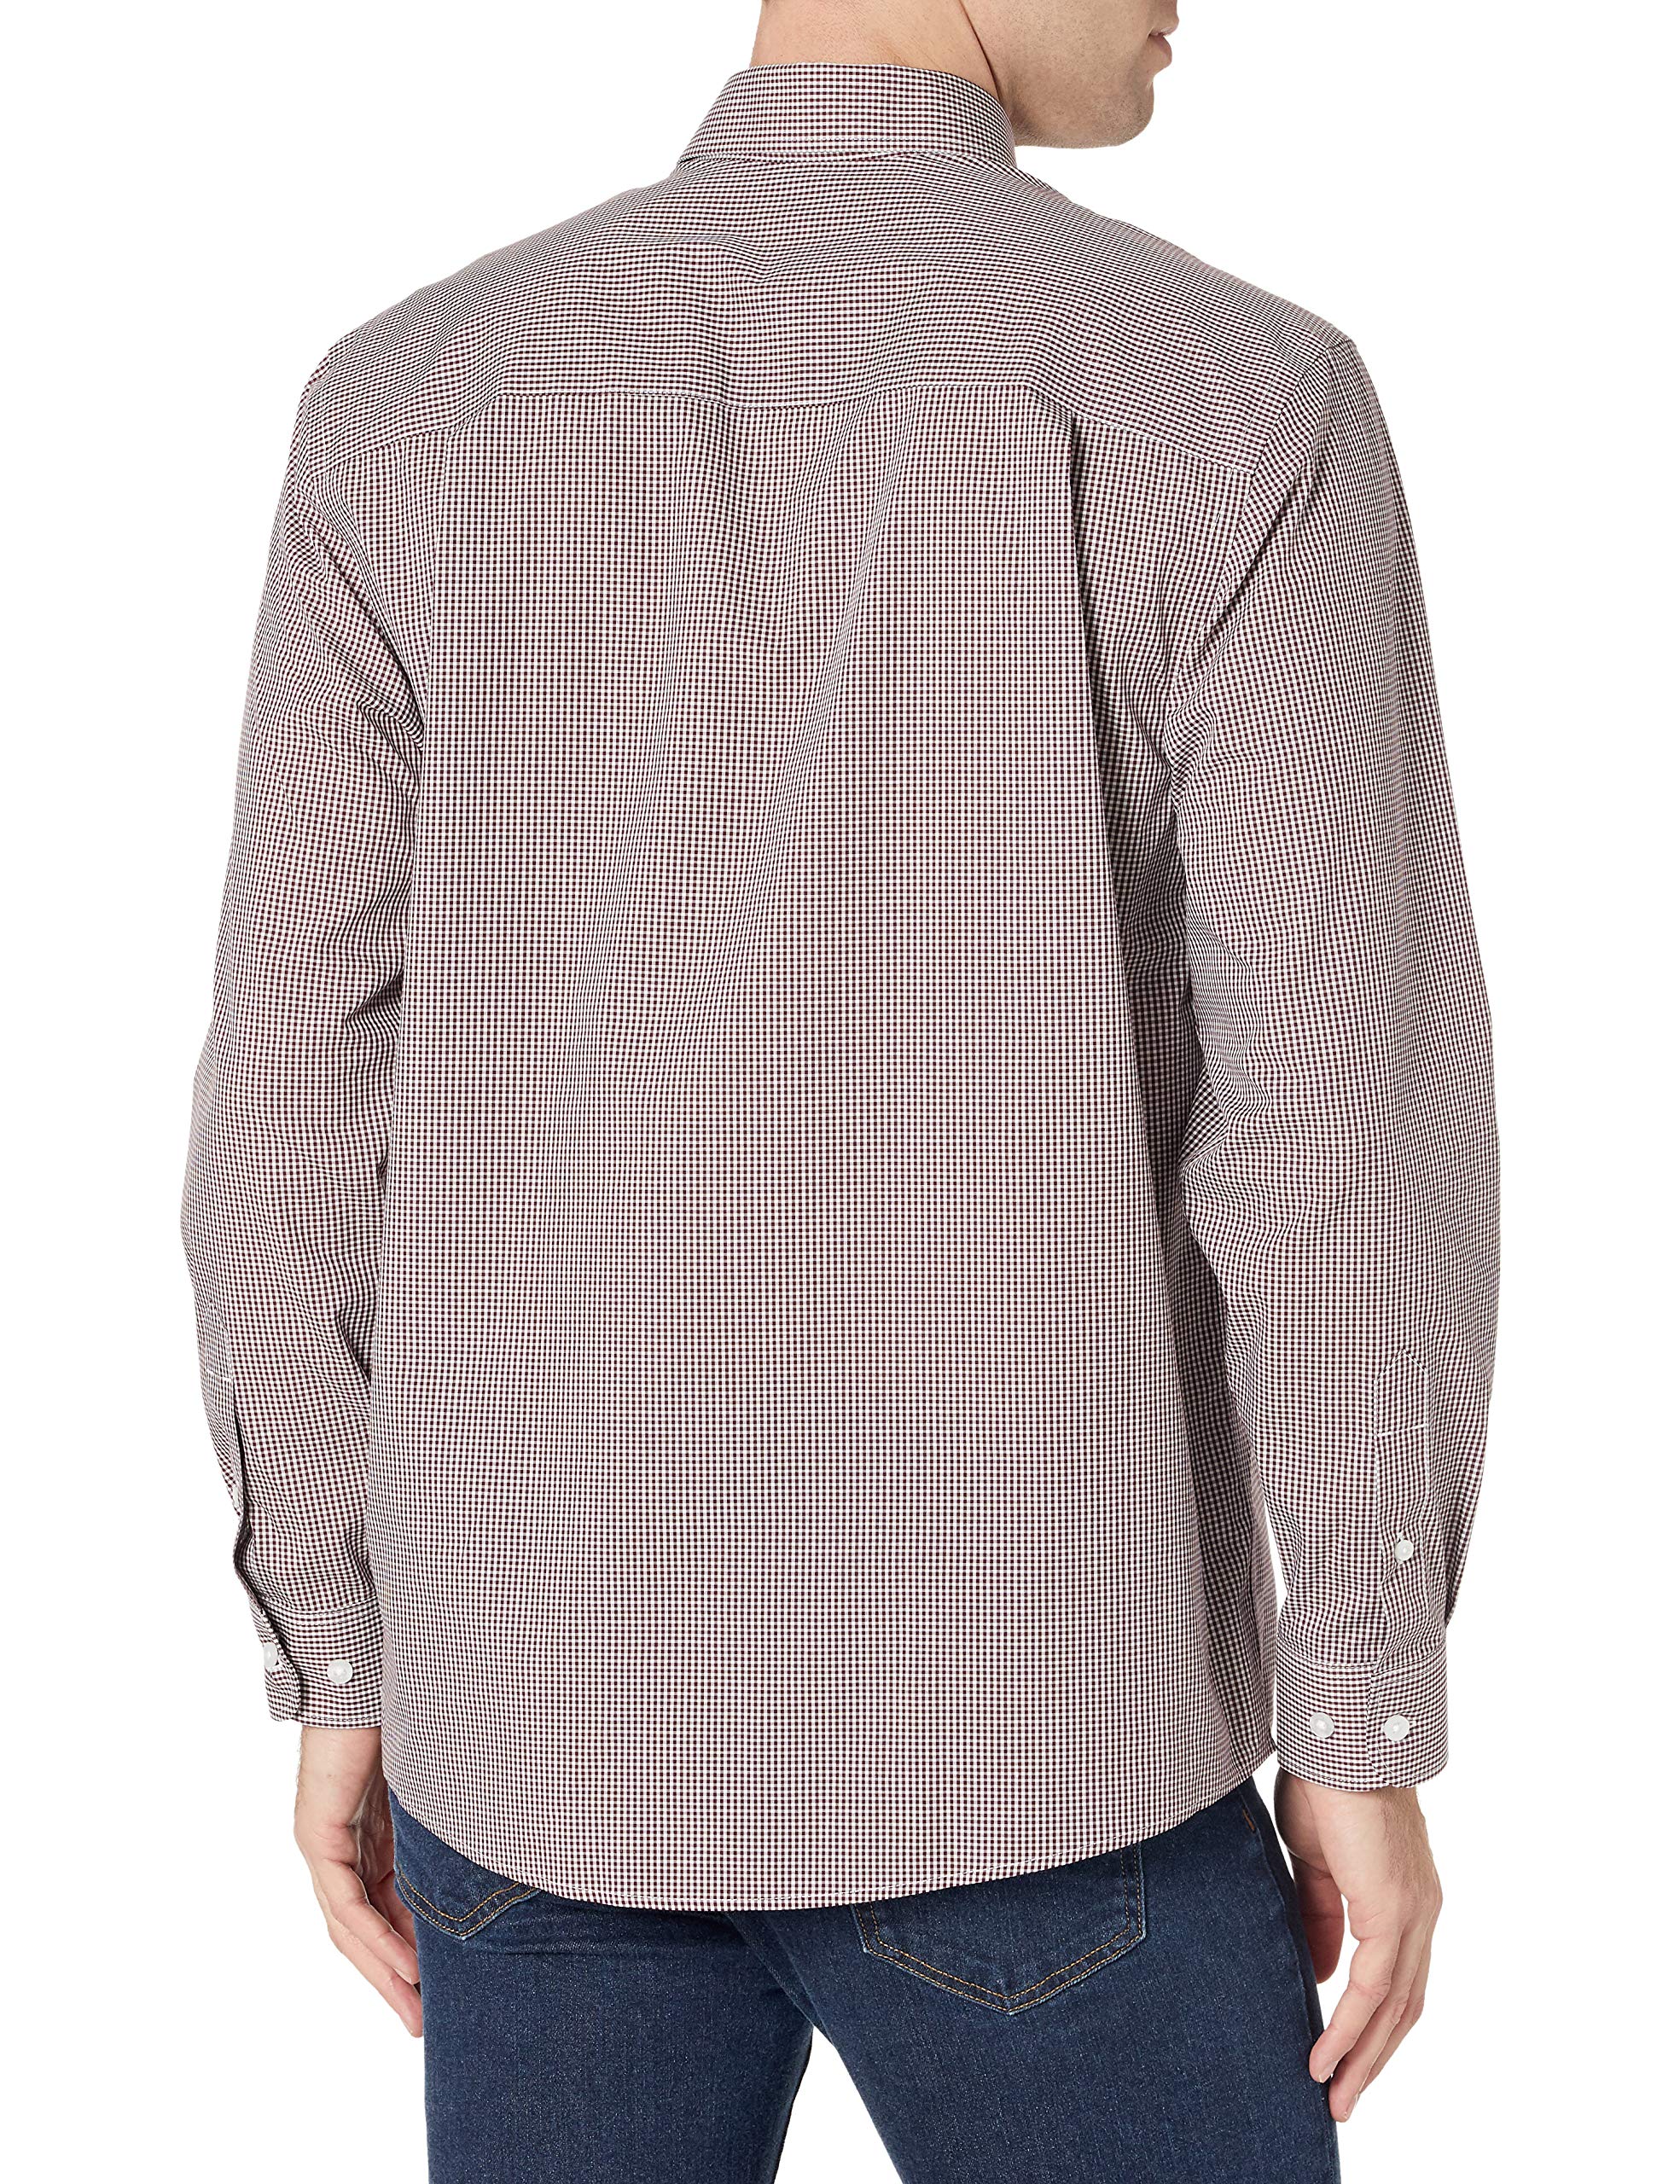 Cutter & Buck Men's Long Sleeve Epic Easy Care Gingham Shirt